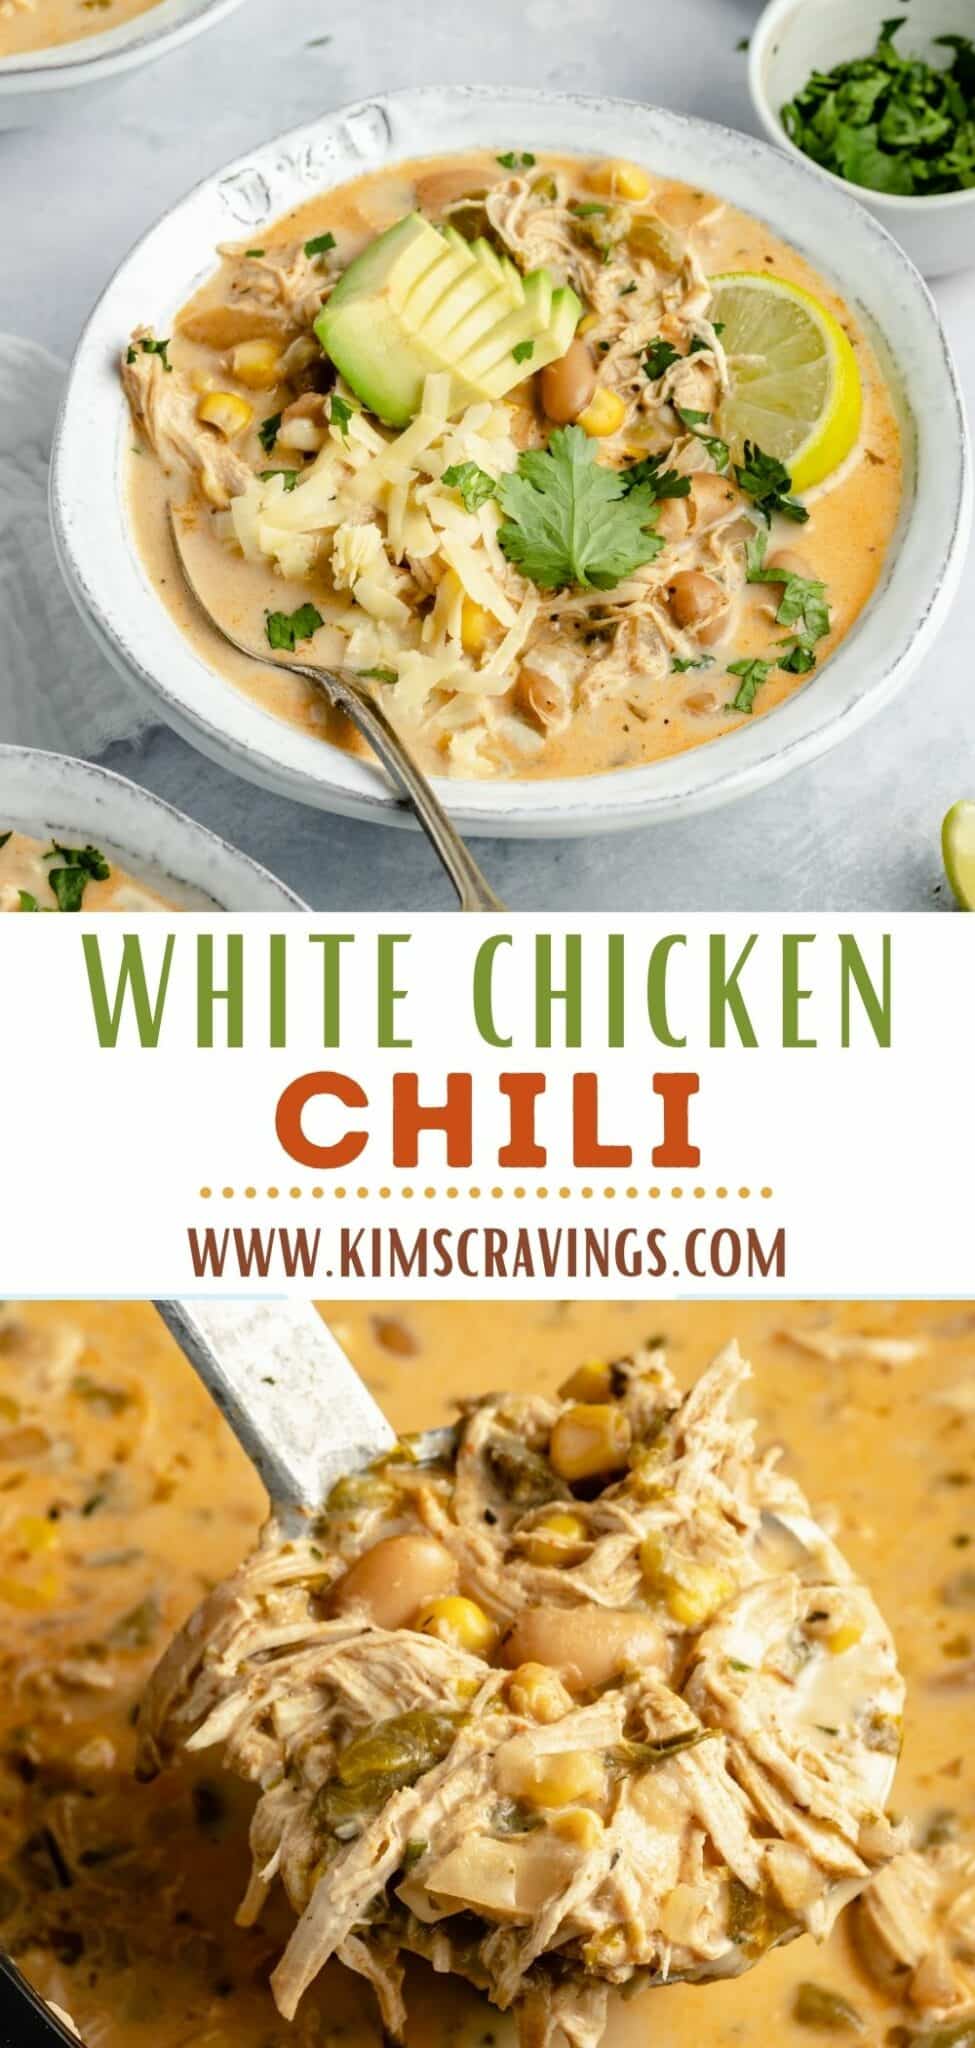 Crockpot White Chicken Chili - Kim's Cravings